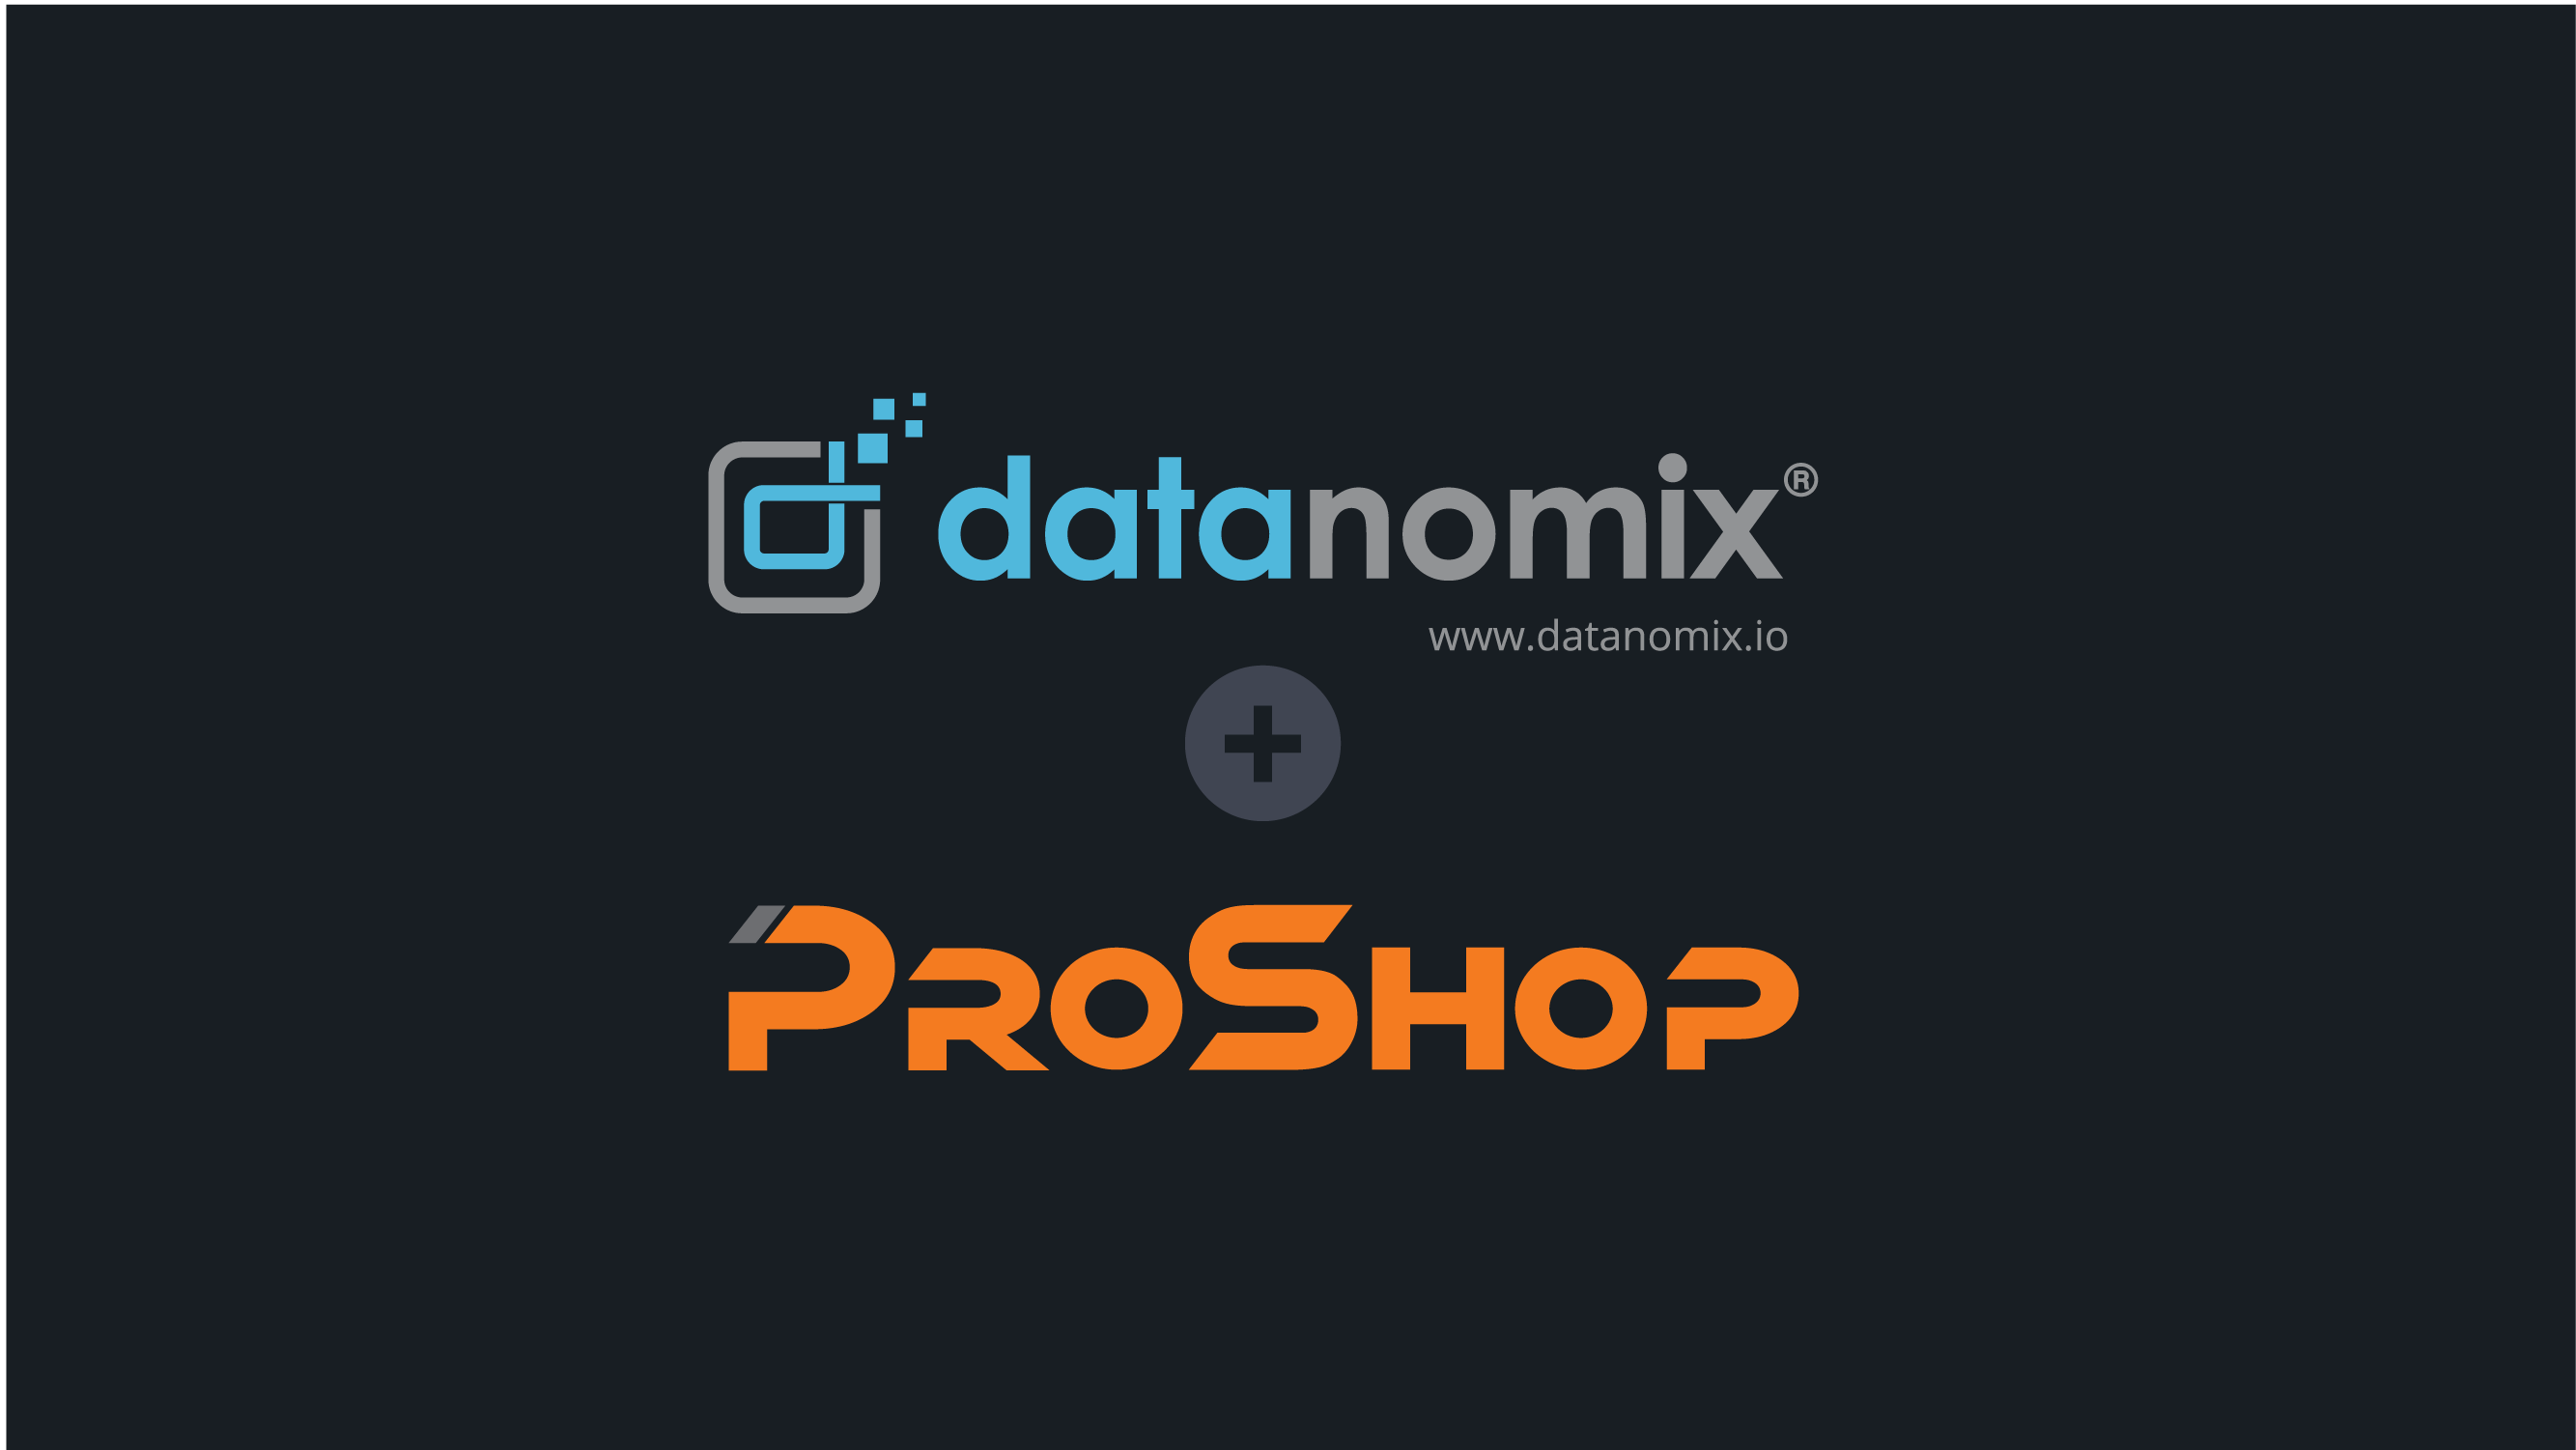 Datanomix + Proshop Partner Up